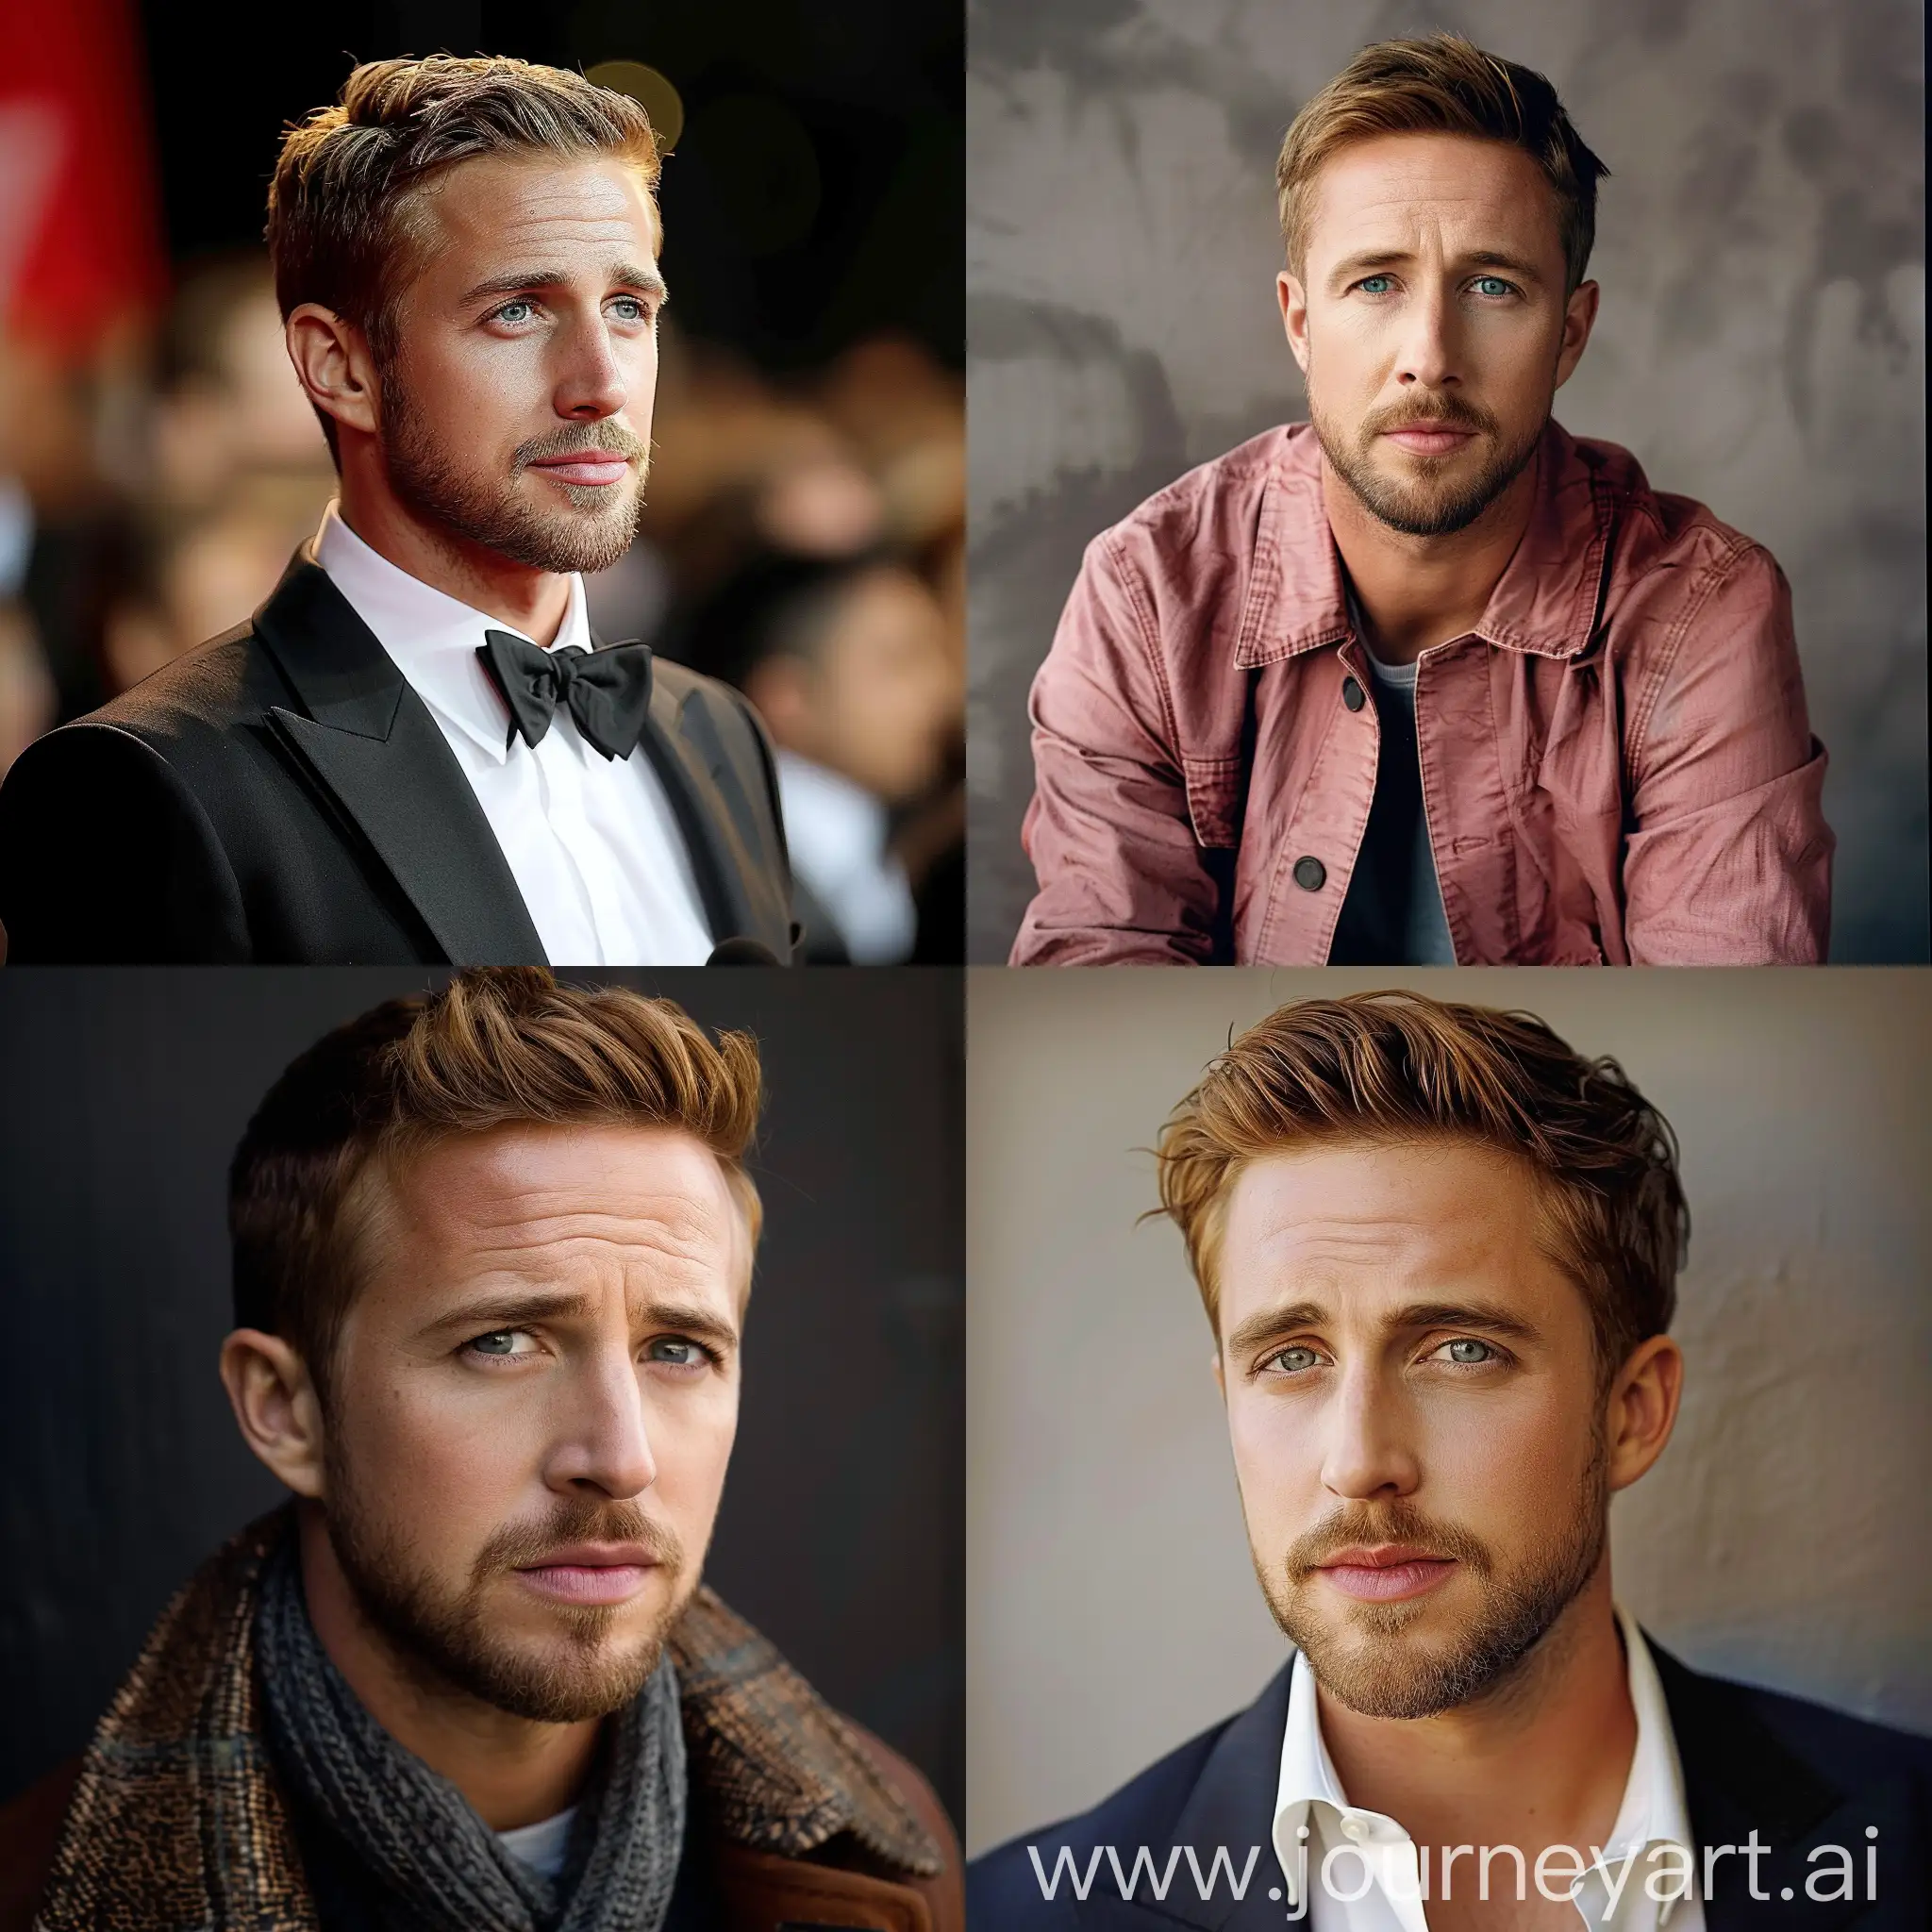 Ryan-Gosling-in-a-11-Realistic-Portrait